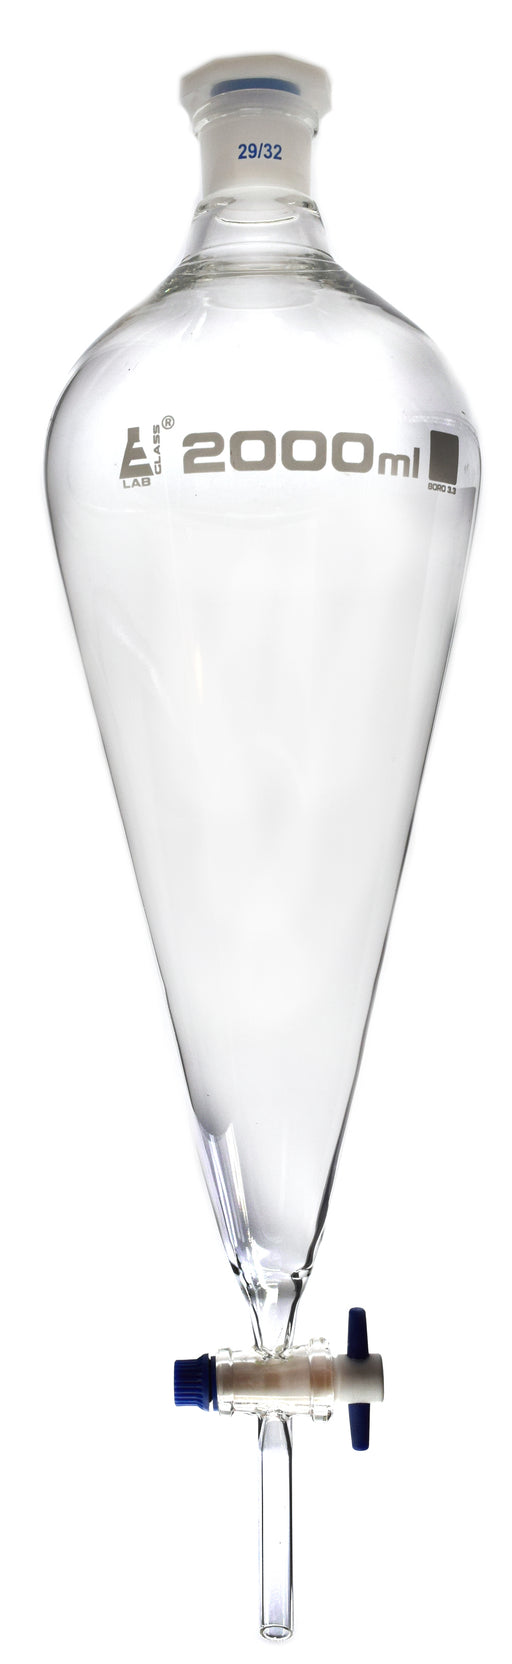 Squibb Separating Funnel, 2000ml - 29/32 Plastic Stopper, PTFE Key Stopcock, Ungraduated - Borosilicate Glass - Eisco Labs